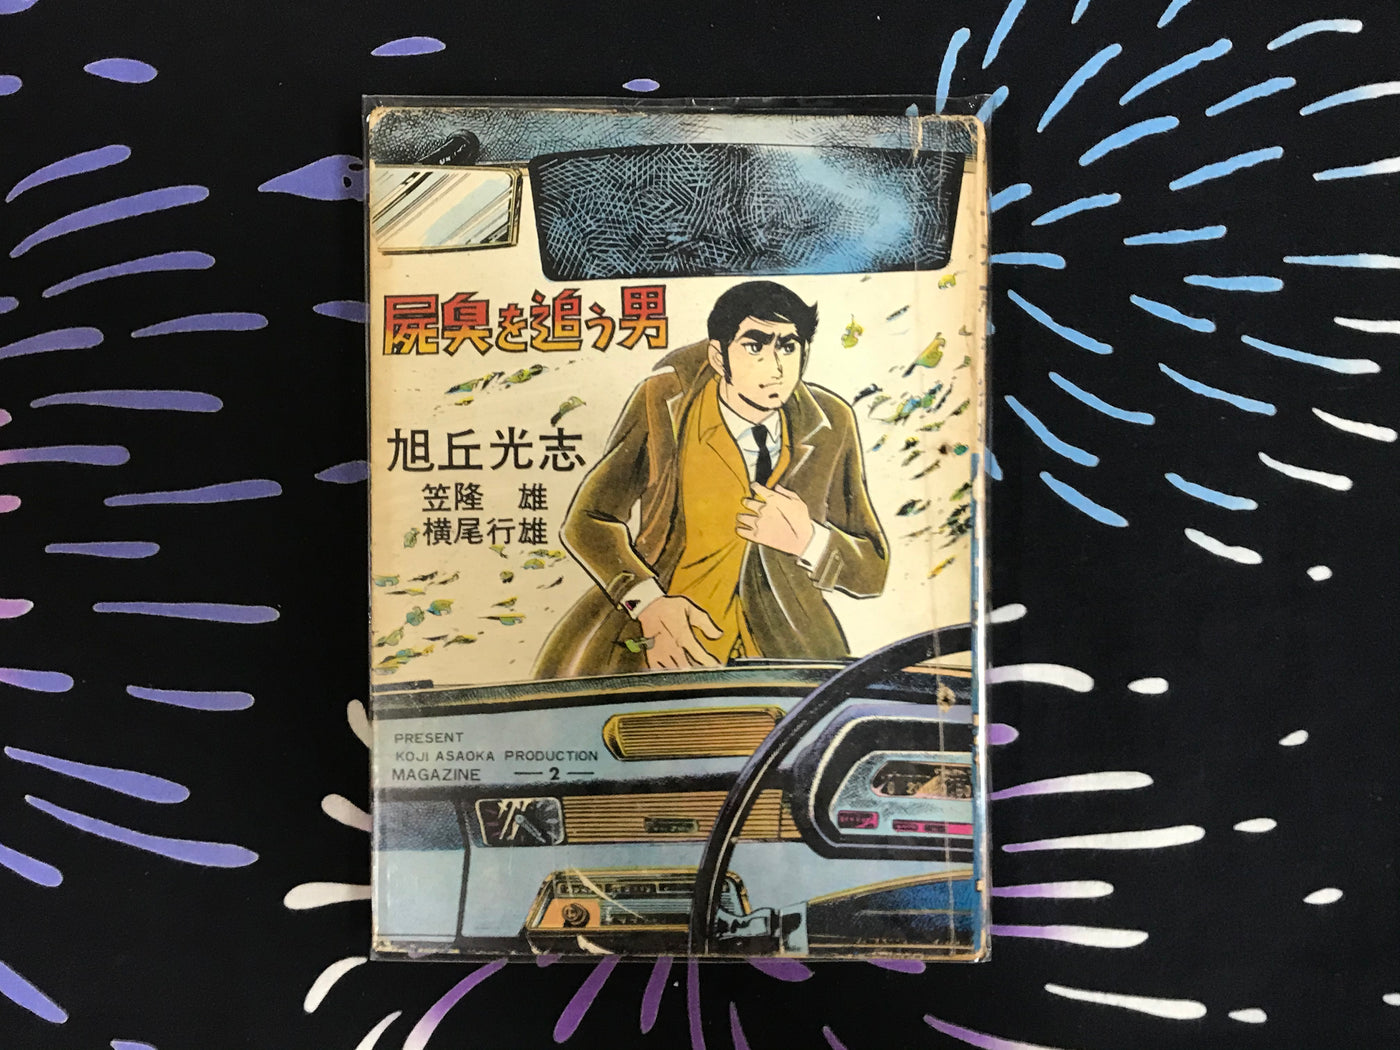 The Man Following the Coprse Stench by Koji Asaoka (1960s)